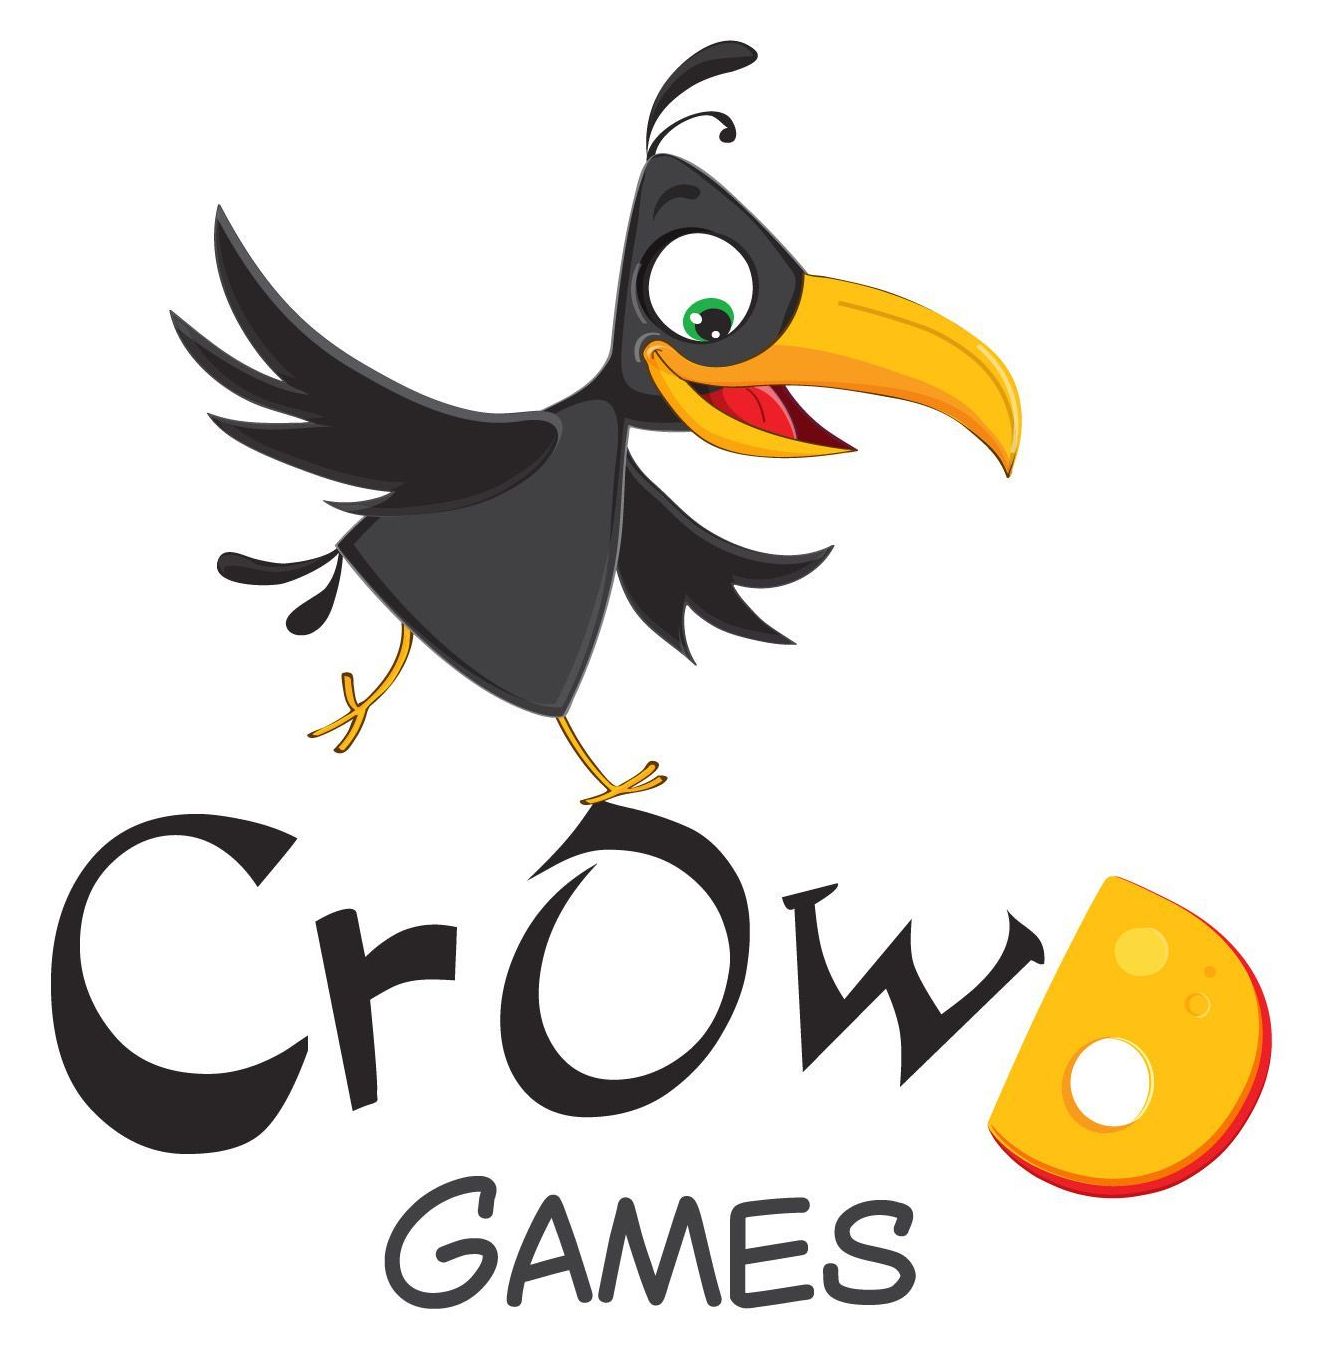 Brand: CrowD Games